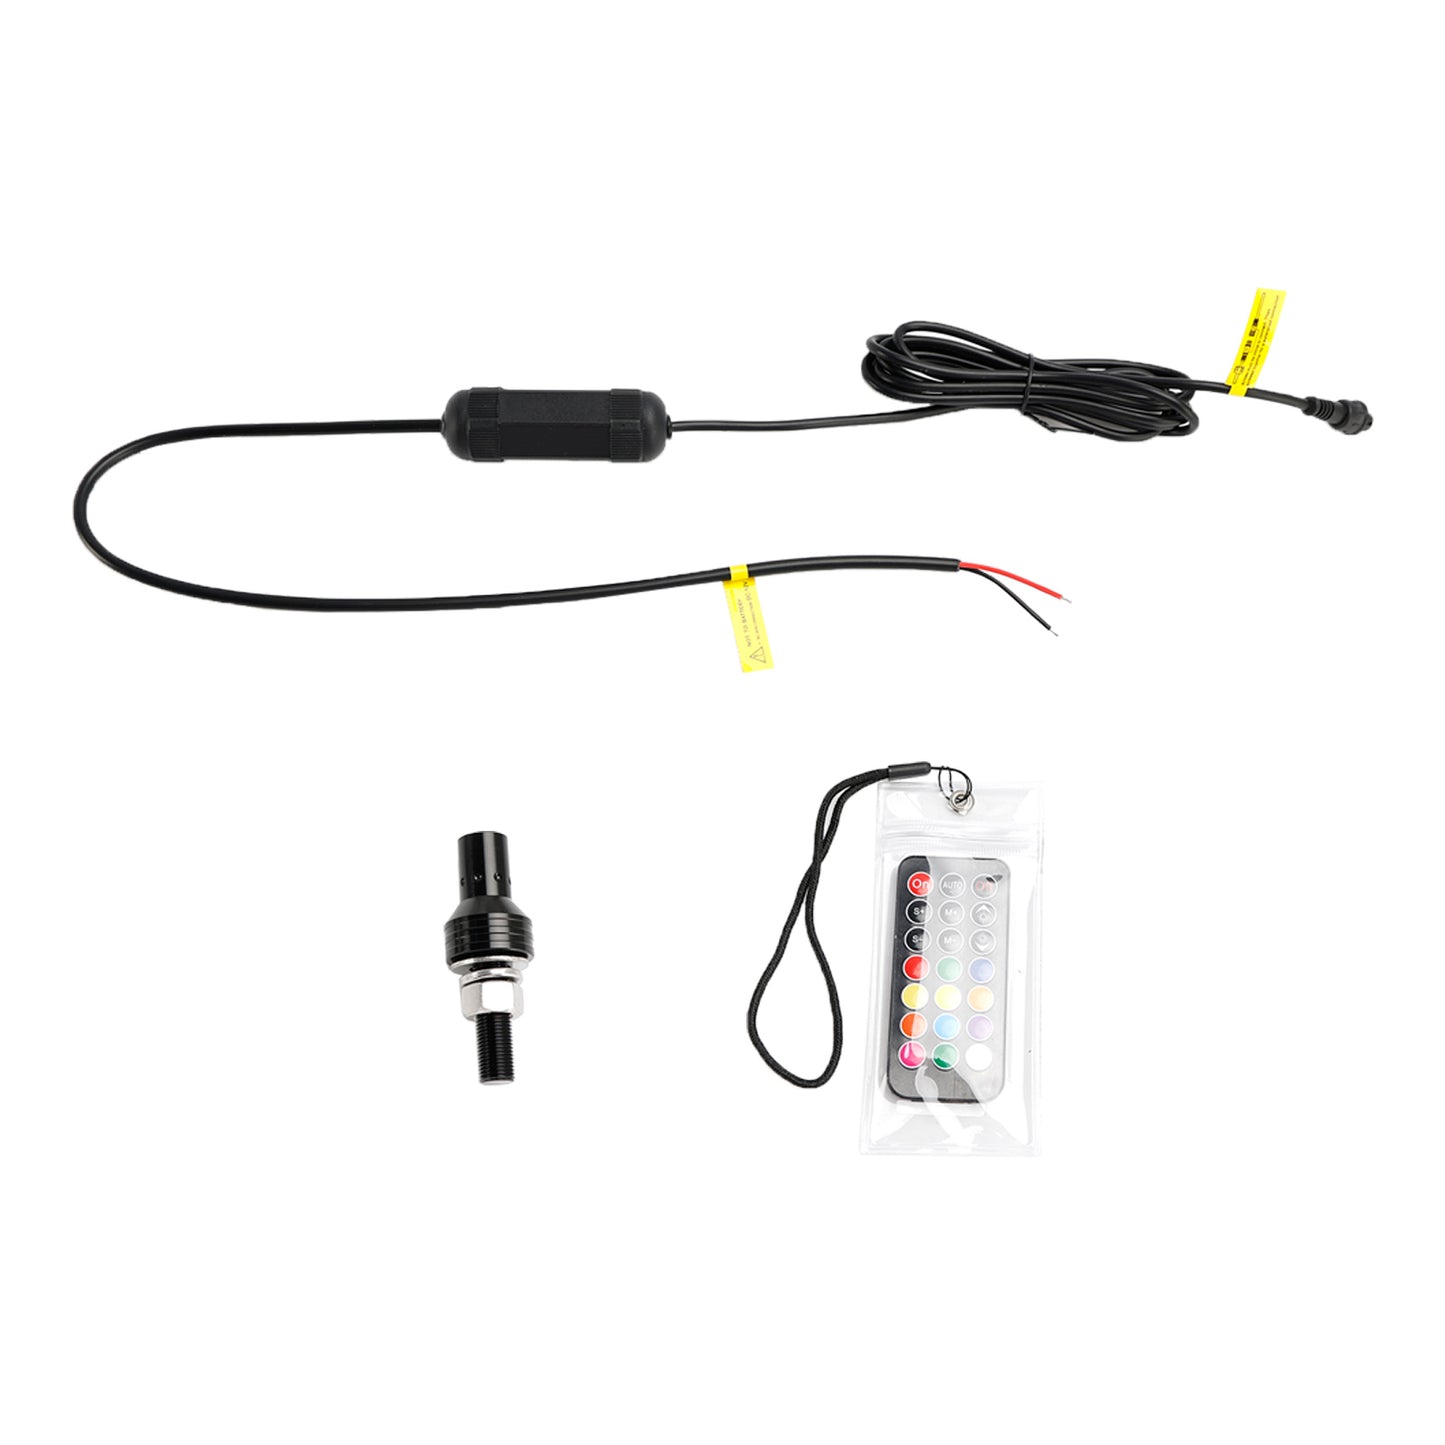 5ft RGB LED APP Whip Lights Antenne mit Flaggenfernbedienung für Polaris UTV ATV